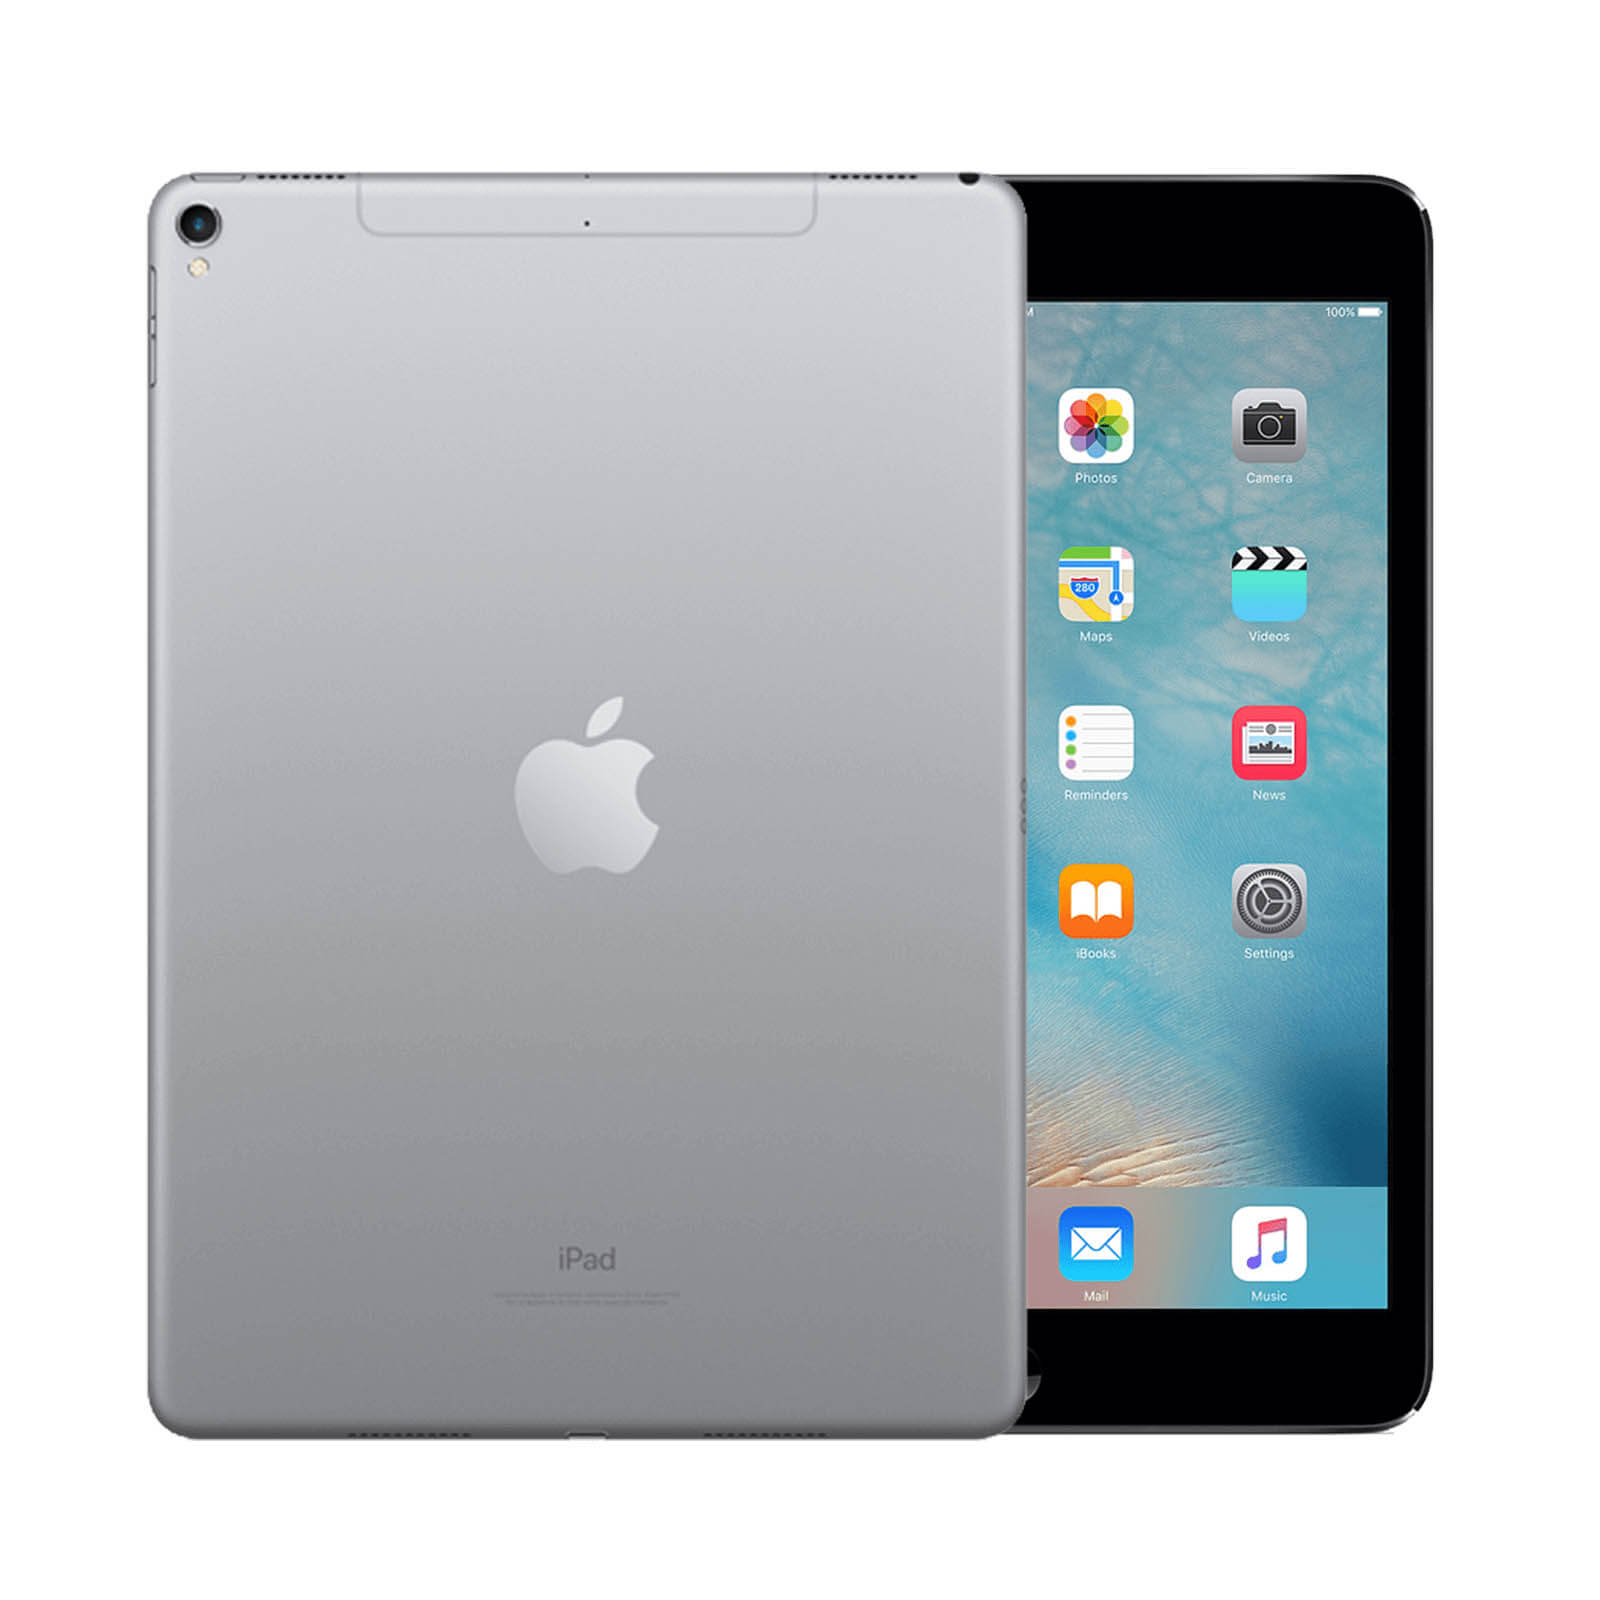 Apple iPad 32GB Ohne Vertrag - Space Grau - Makellos